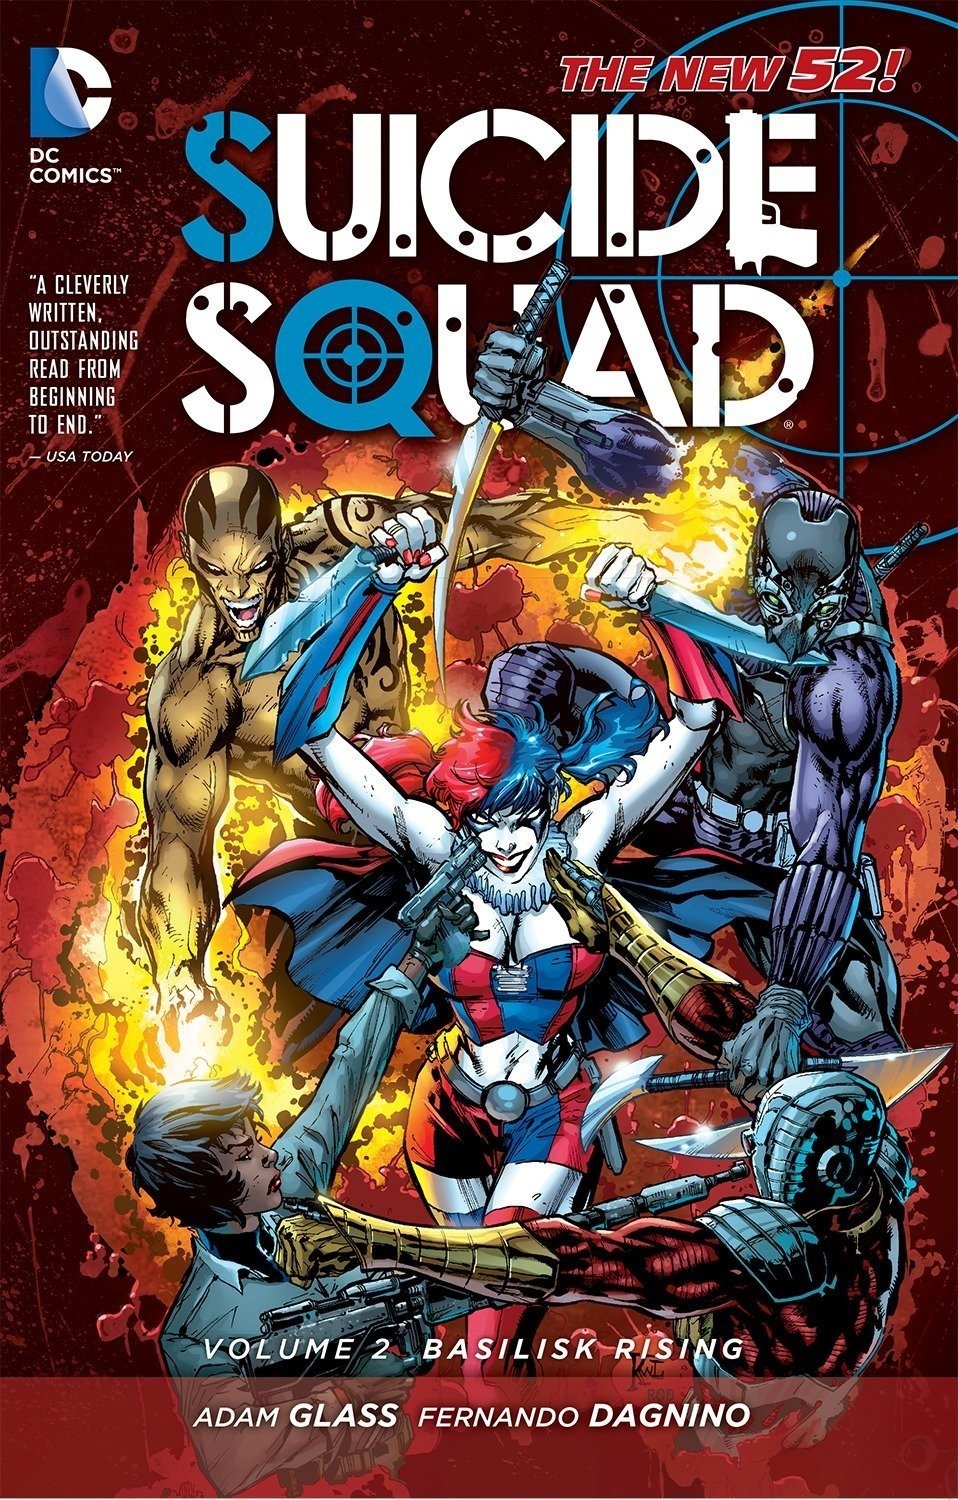 Copertina USA Suicide Squad Volune 2 - Basilisk Rising (The New 52)